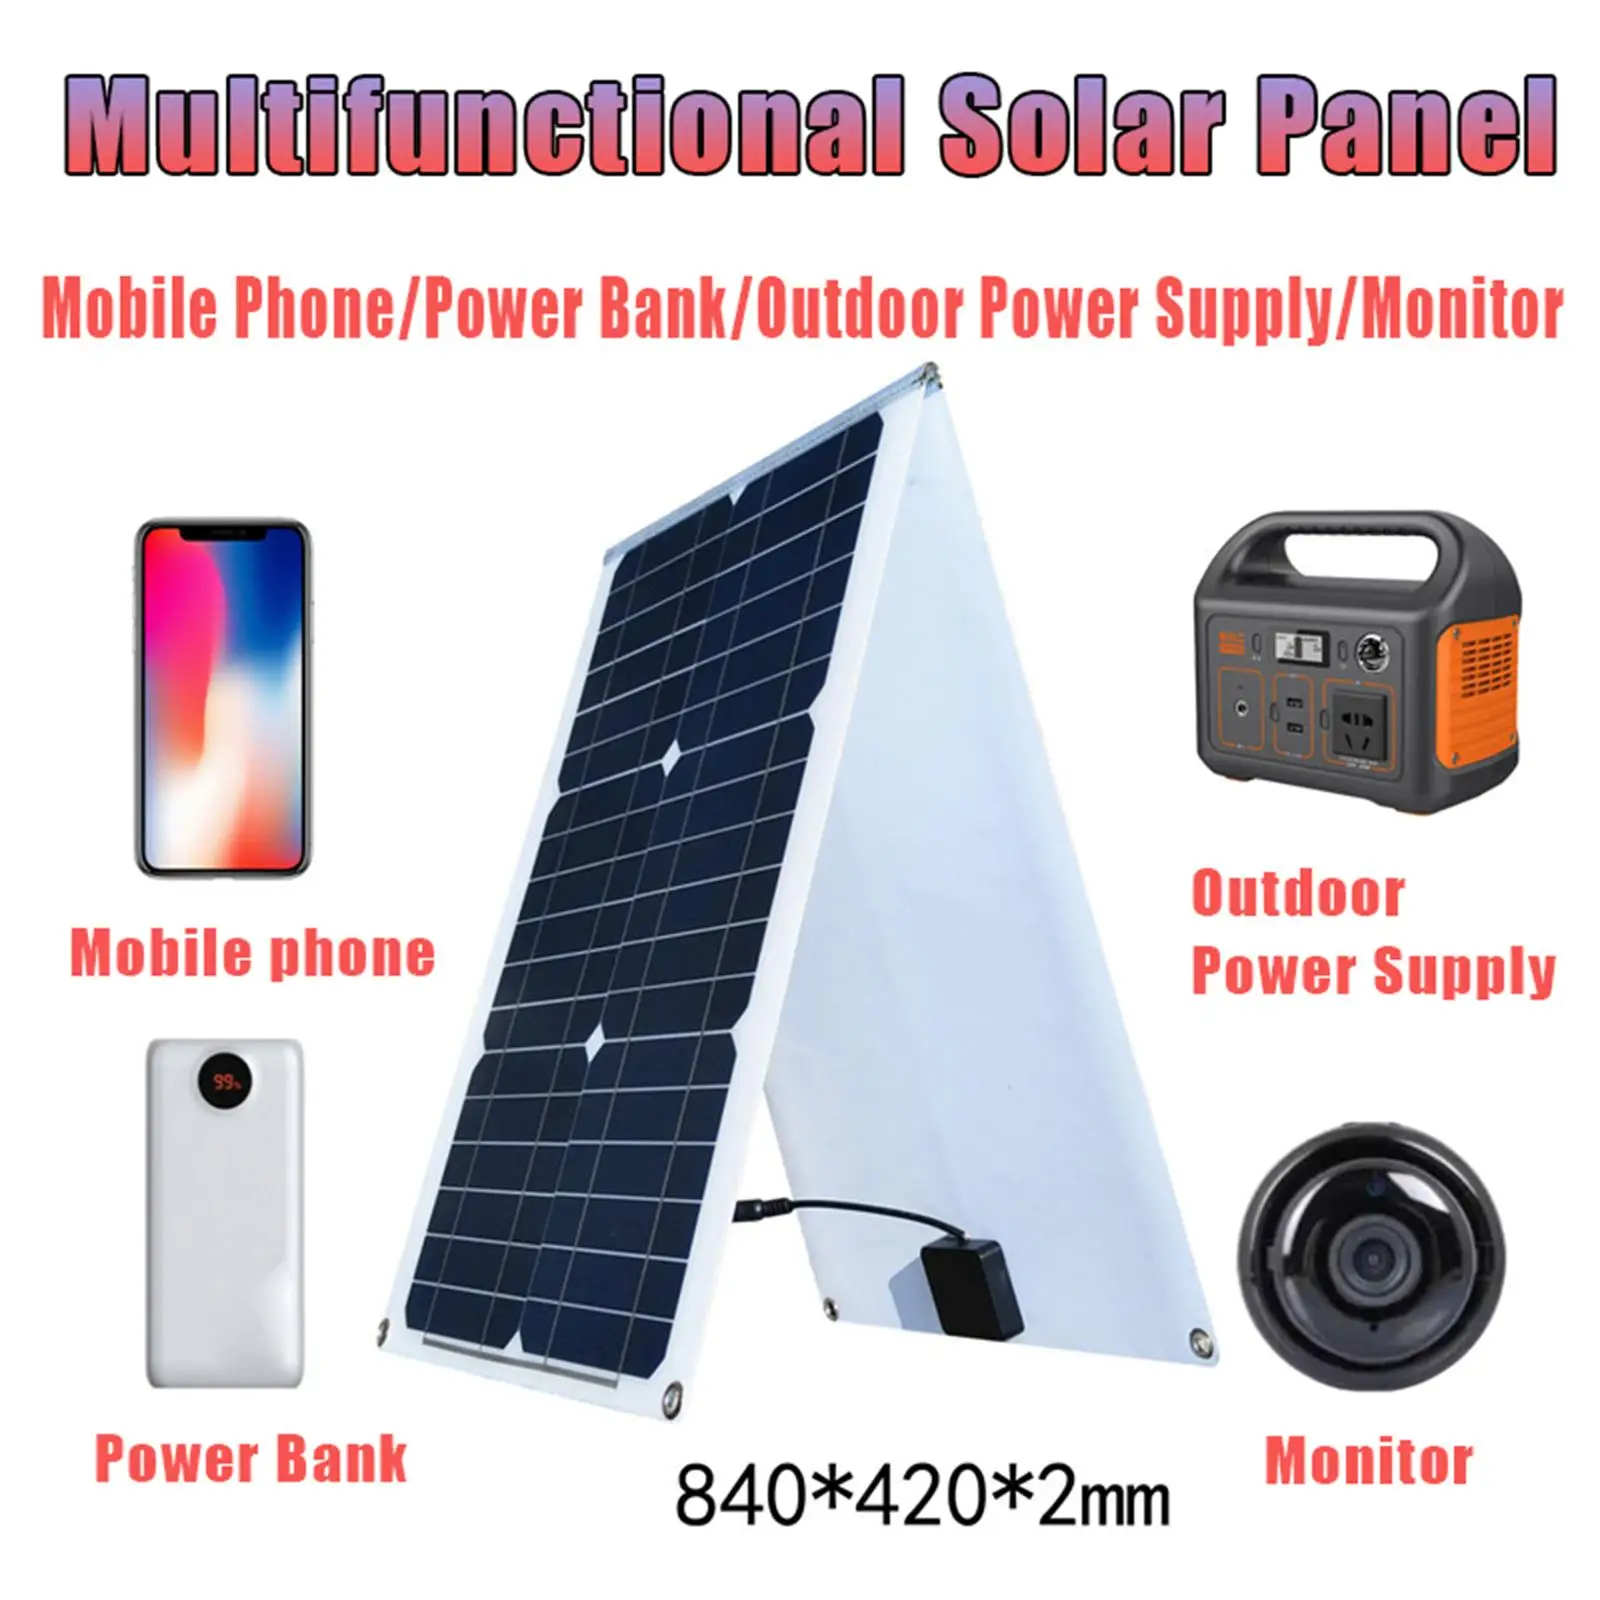 36W DC 12V USB 5V Monocrystalline Solar Panel Power Station GPS Phone Charger for Biking Outdoor Yard